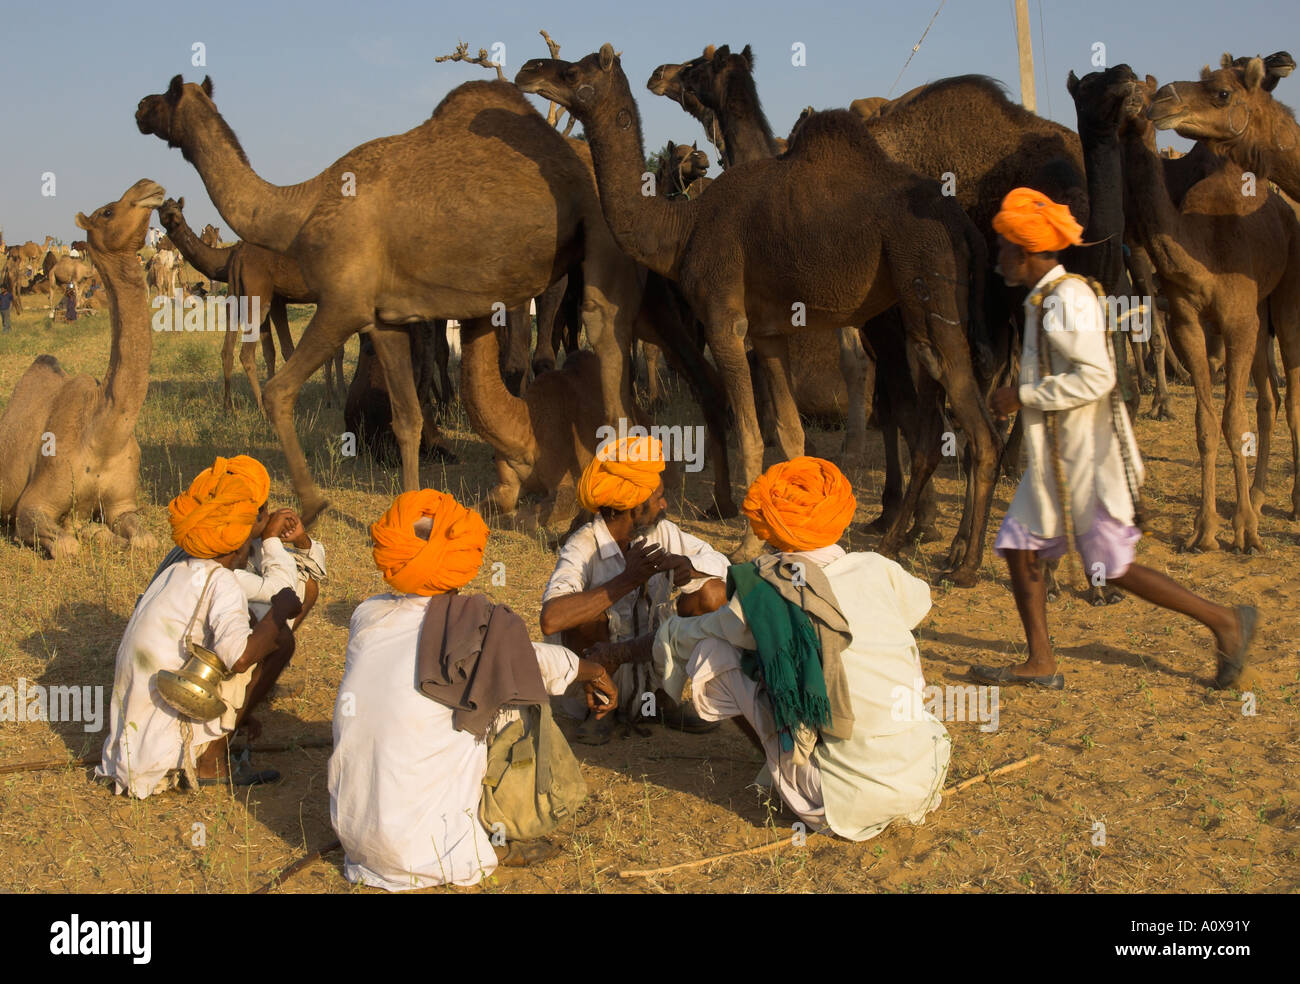 India Rajasthan Pushkar Mela Huge camel and cattle fair for semi nomadic tribes group of men with orange turbans sitting togethe Stock Photo